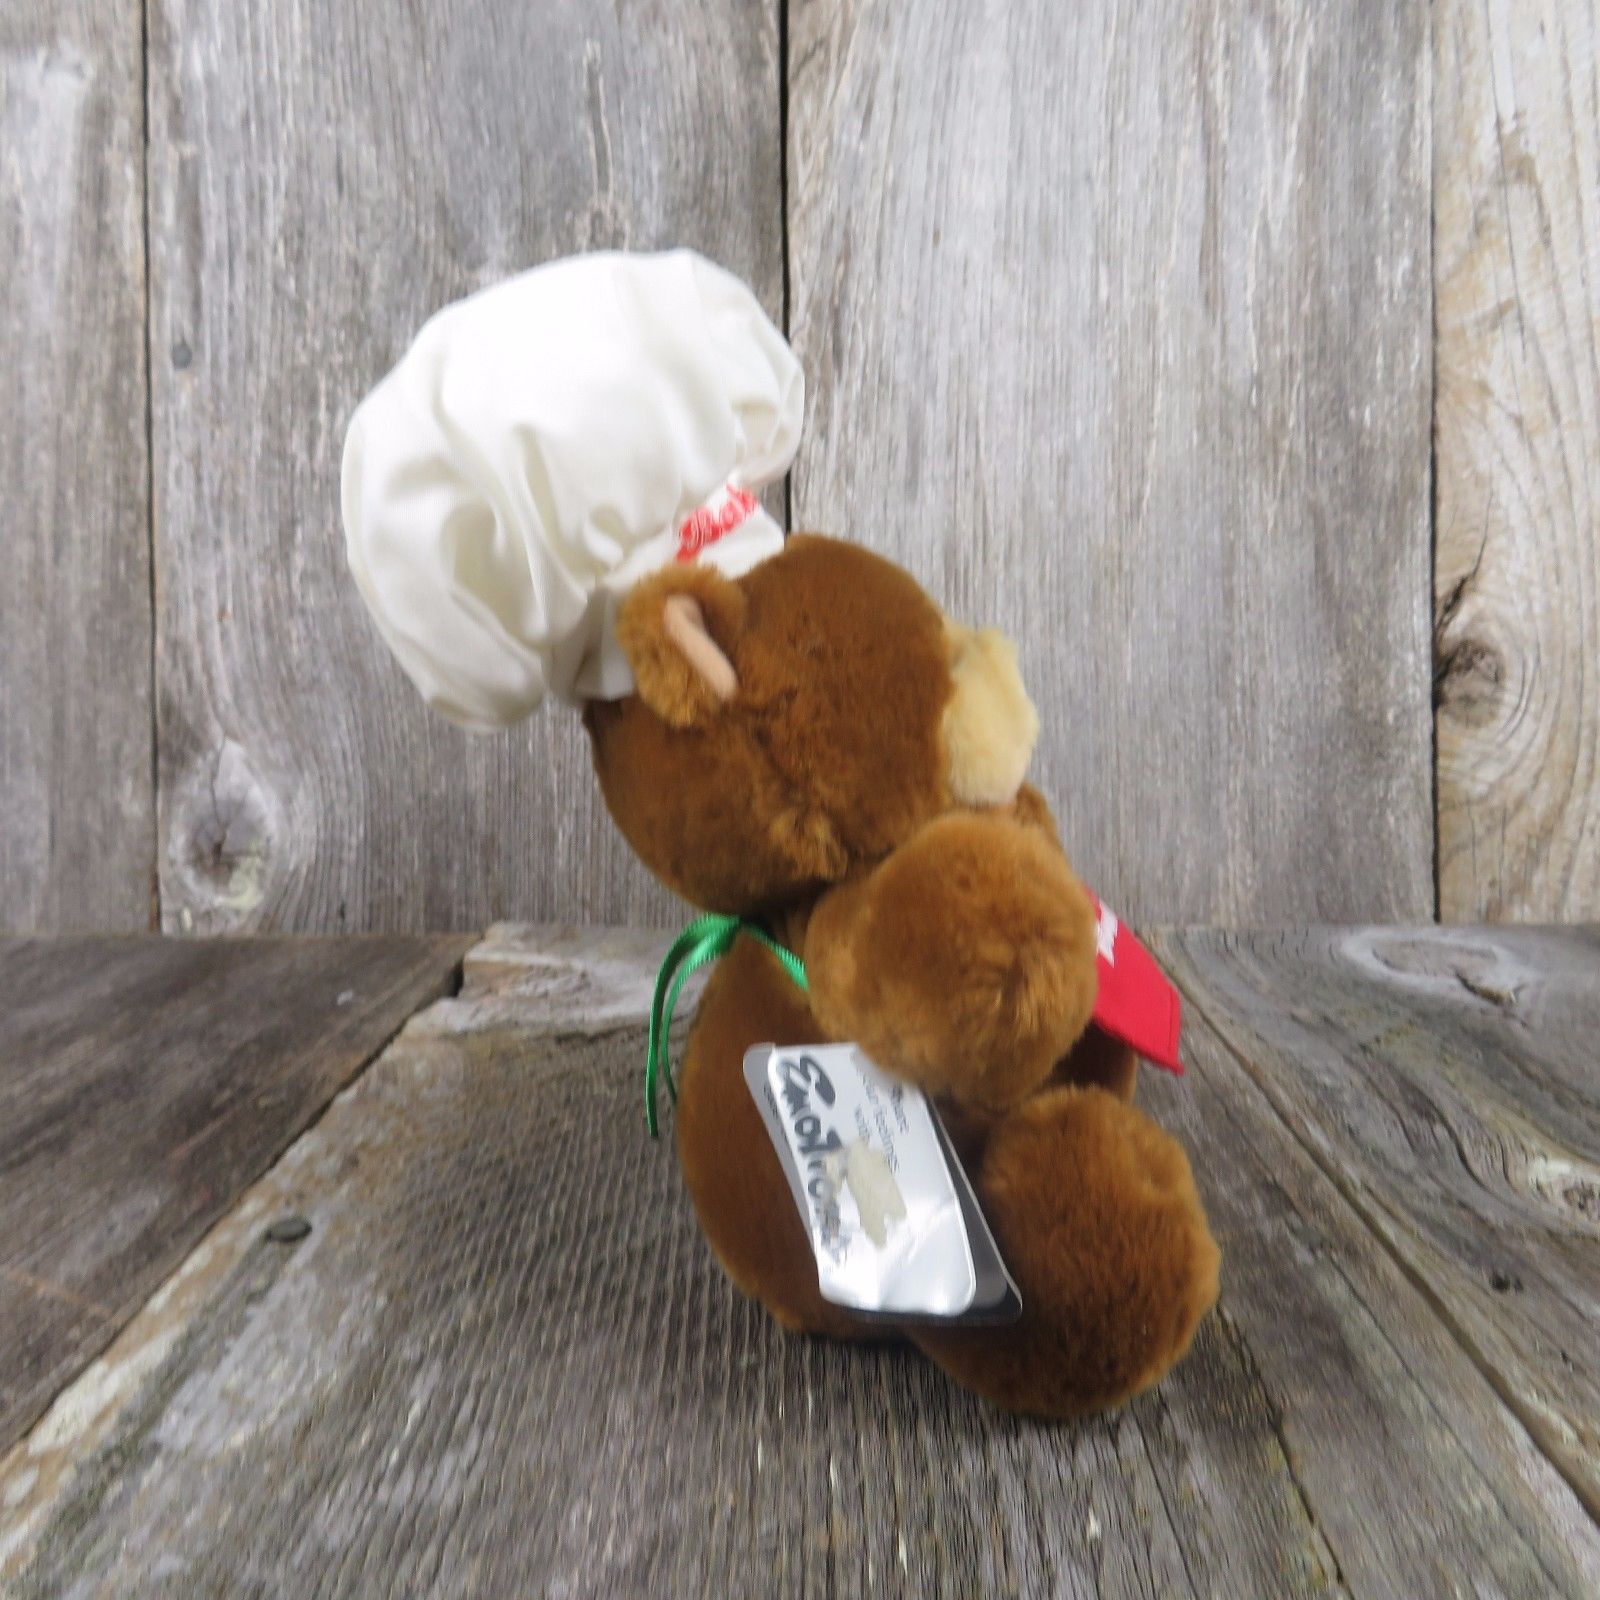 Vintage Teddy Bear Baker Plush Christmas Stuffed Animal Spice Cookies Mattel Emotions - At Grandma's Table